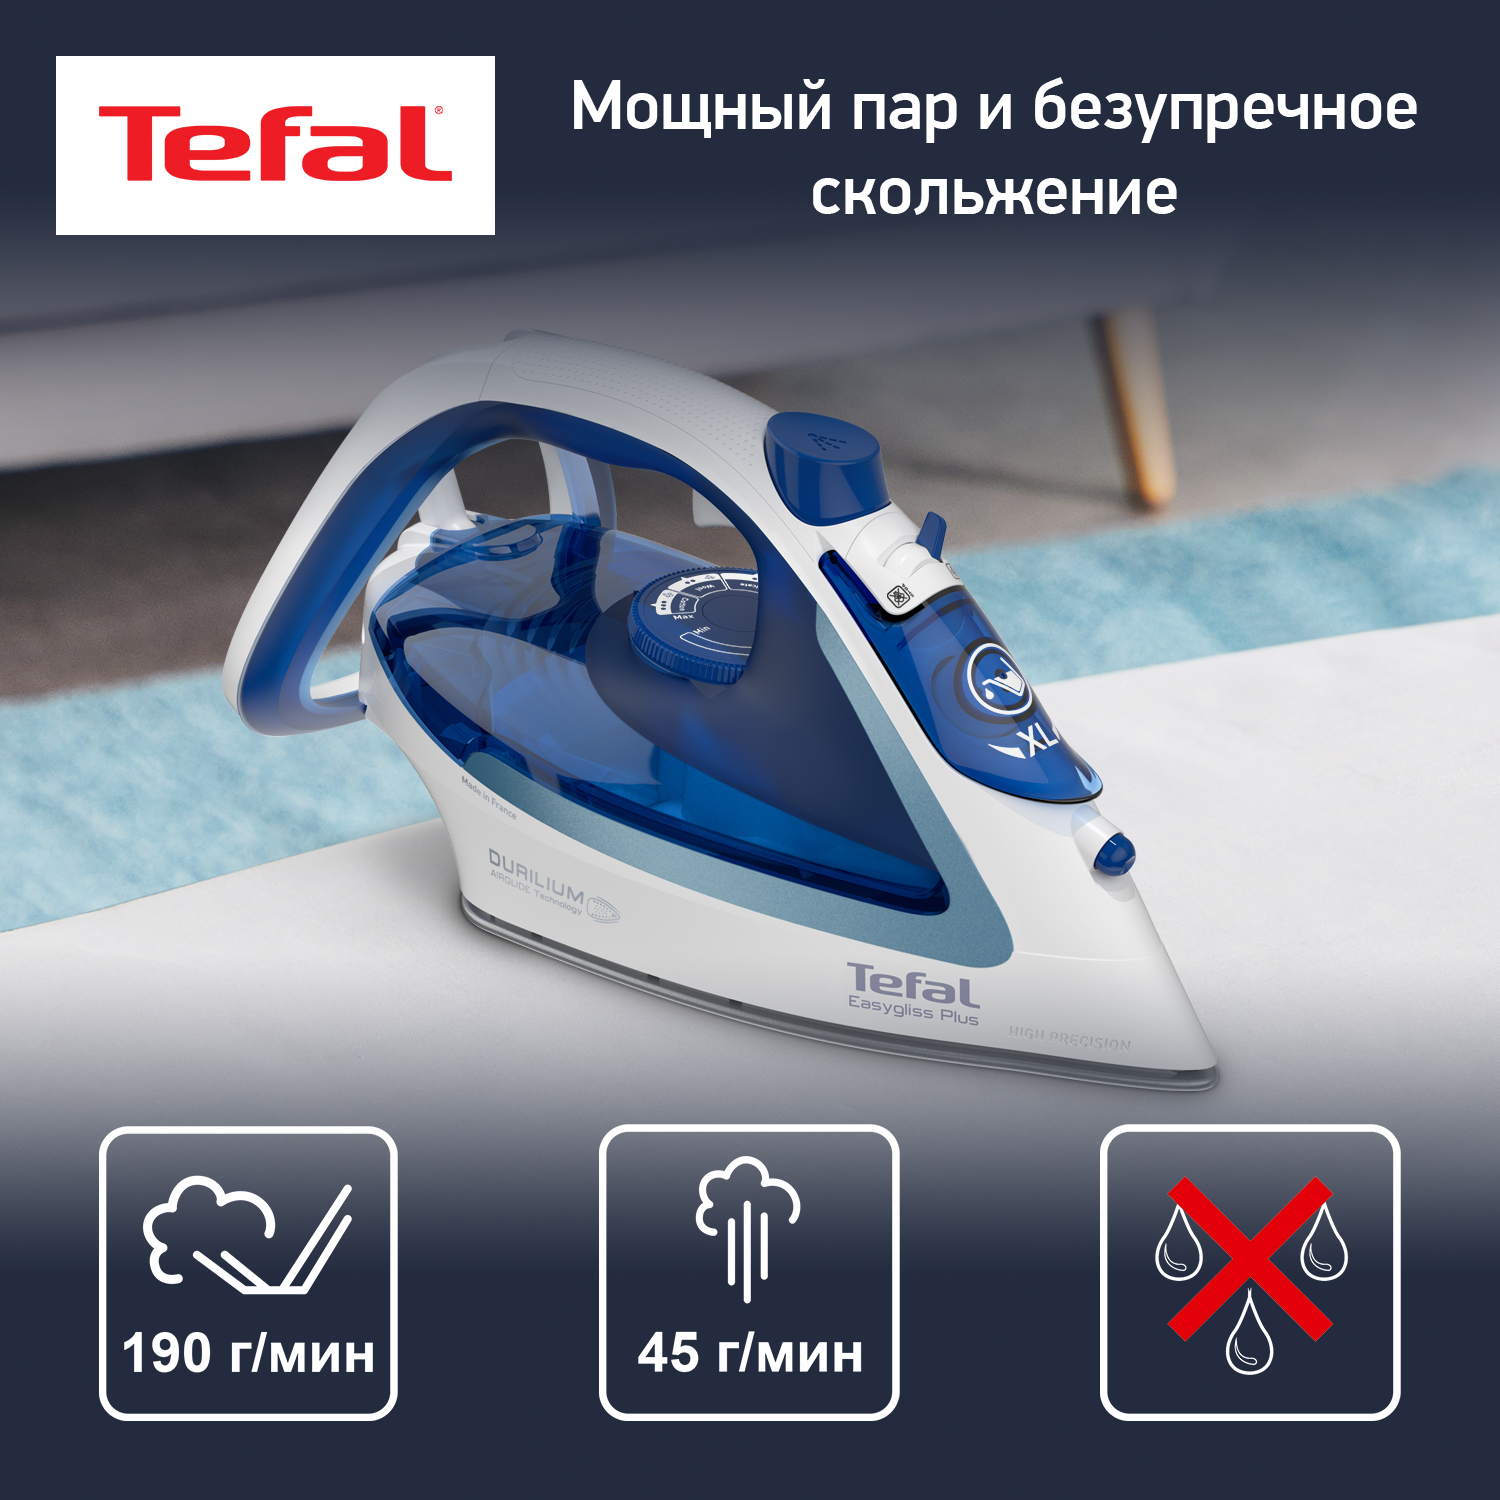 Утюг Tefal Easygliss Plus 2 FV5715E0, синий/белый утюг smart protect plus fv6872e0